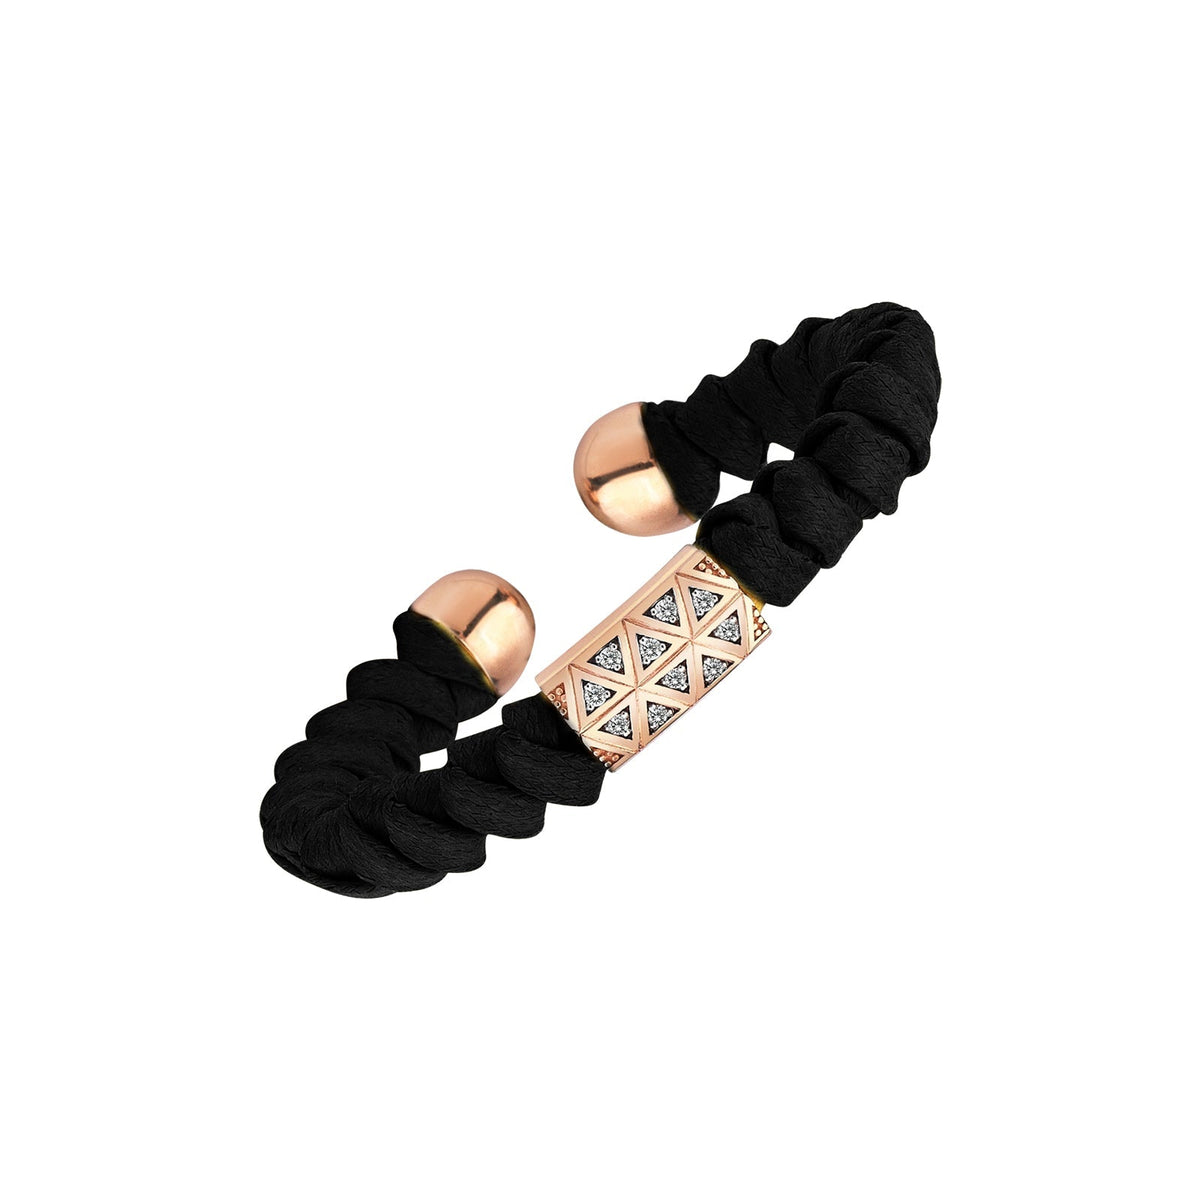 Cayman Cuff Bracelet